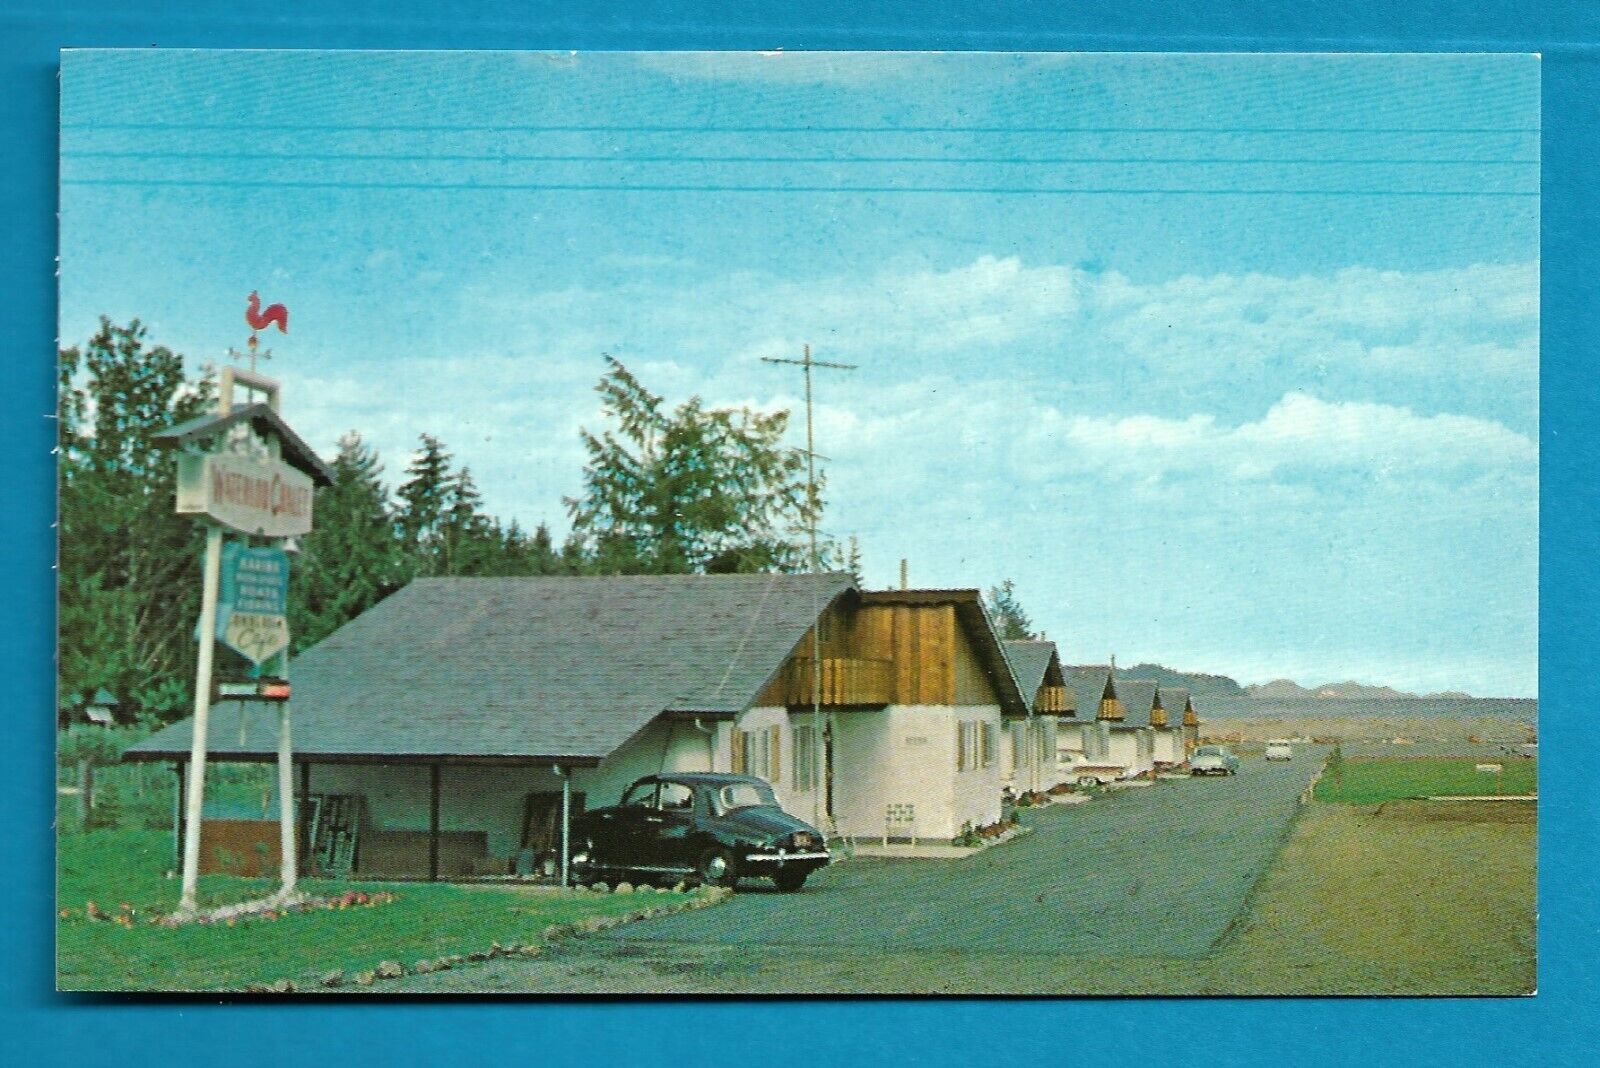 Waterloo Chalets, Fanny Bay, Vancouver Island British Columbia, Grant-Mann Litho